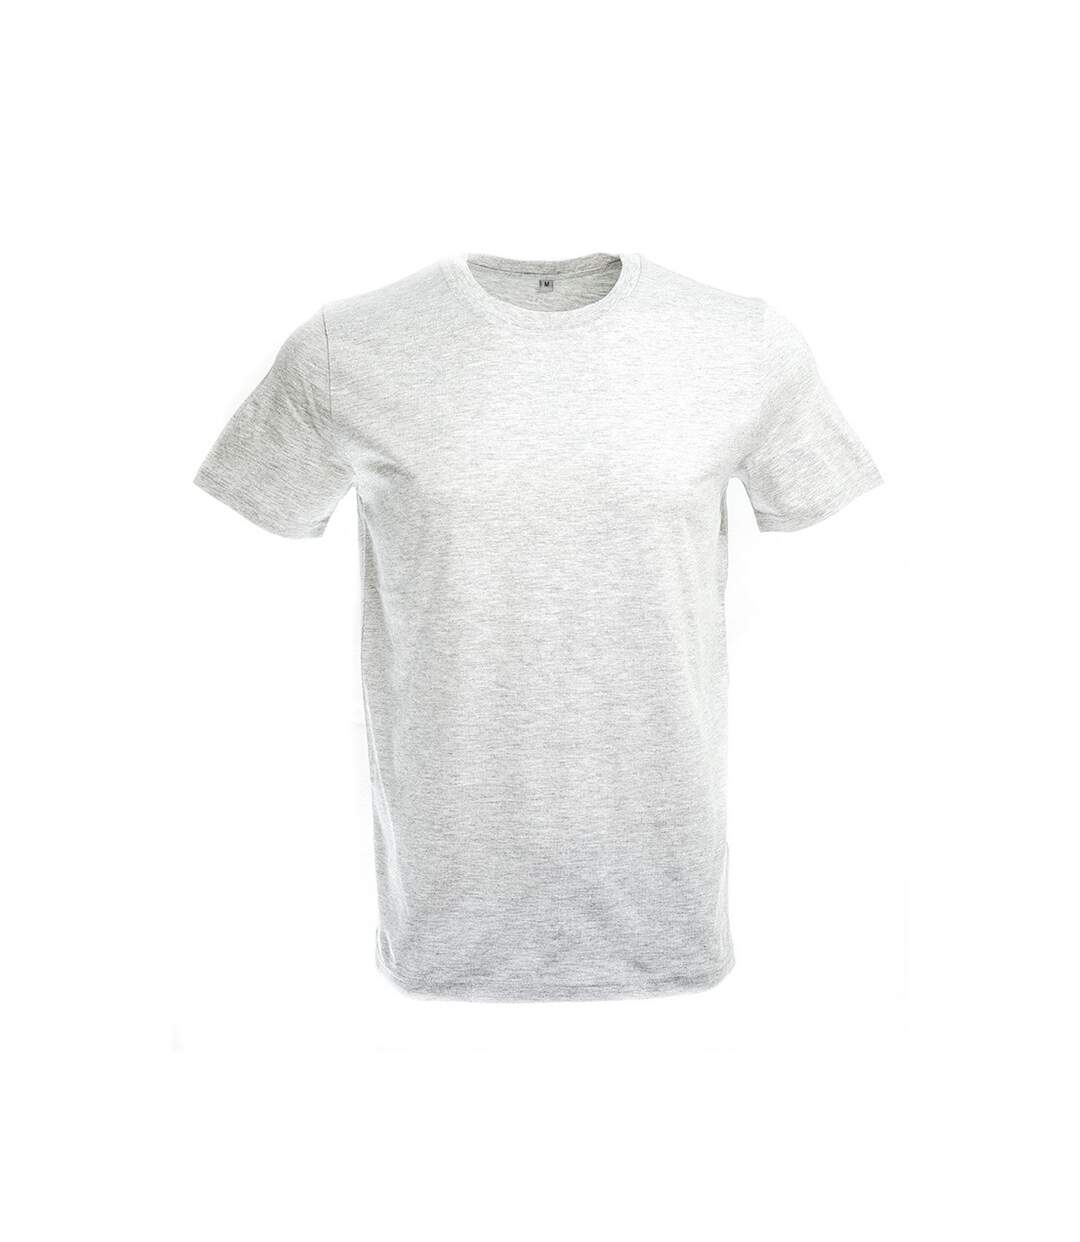 Original FNB - T-Shirt Adulte - Unisexe (Gris claire) - UTPC4010